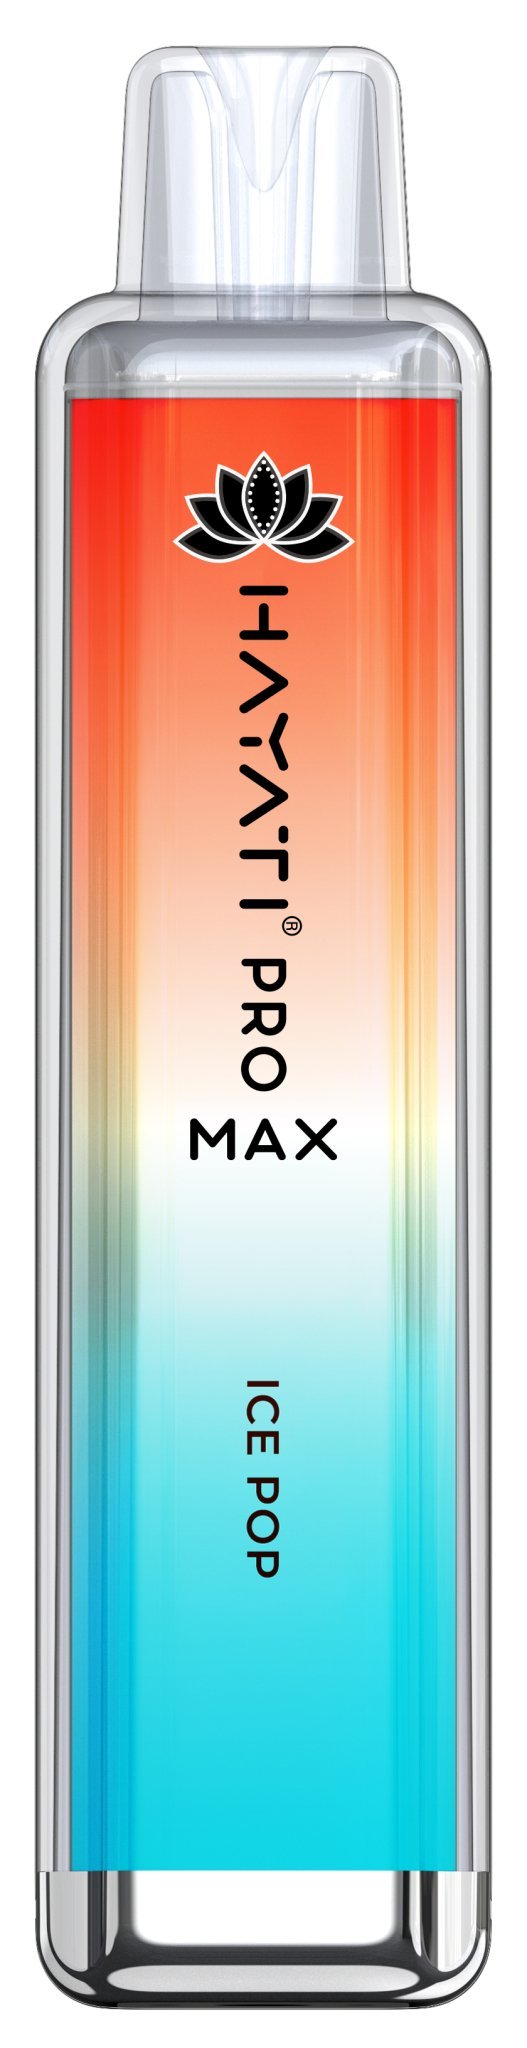 Hayati Pro Max 4000 Puffs Disposable Vape Pod - Box of 10 - Bulk Vape Wholesale